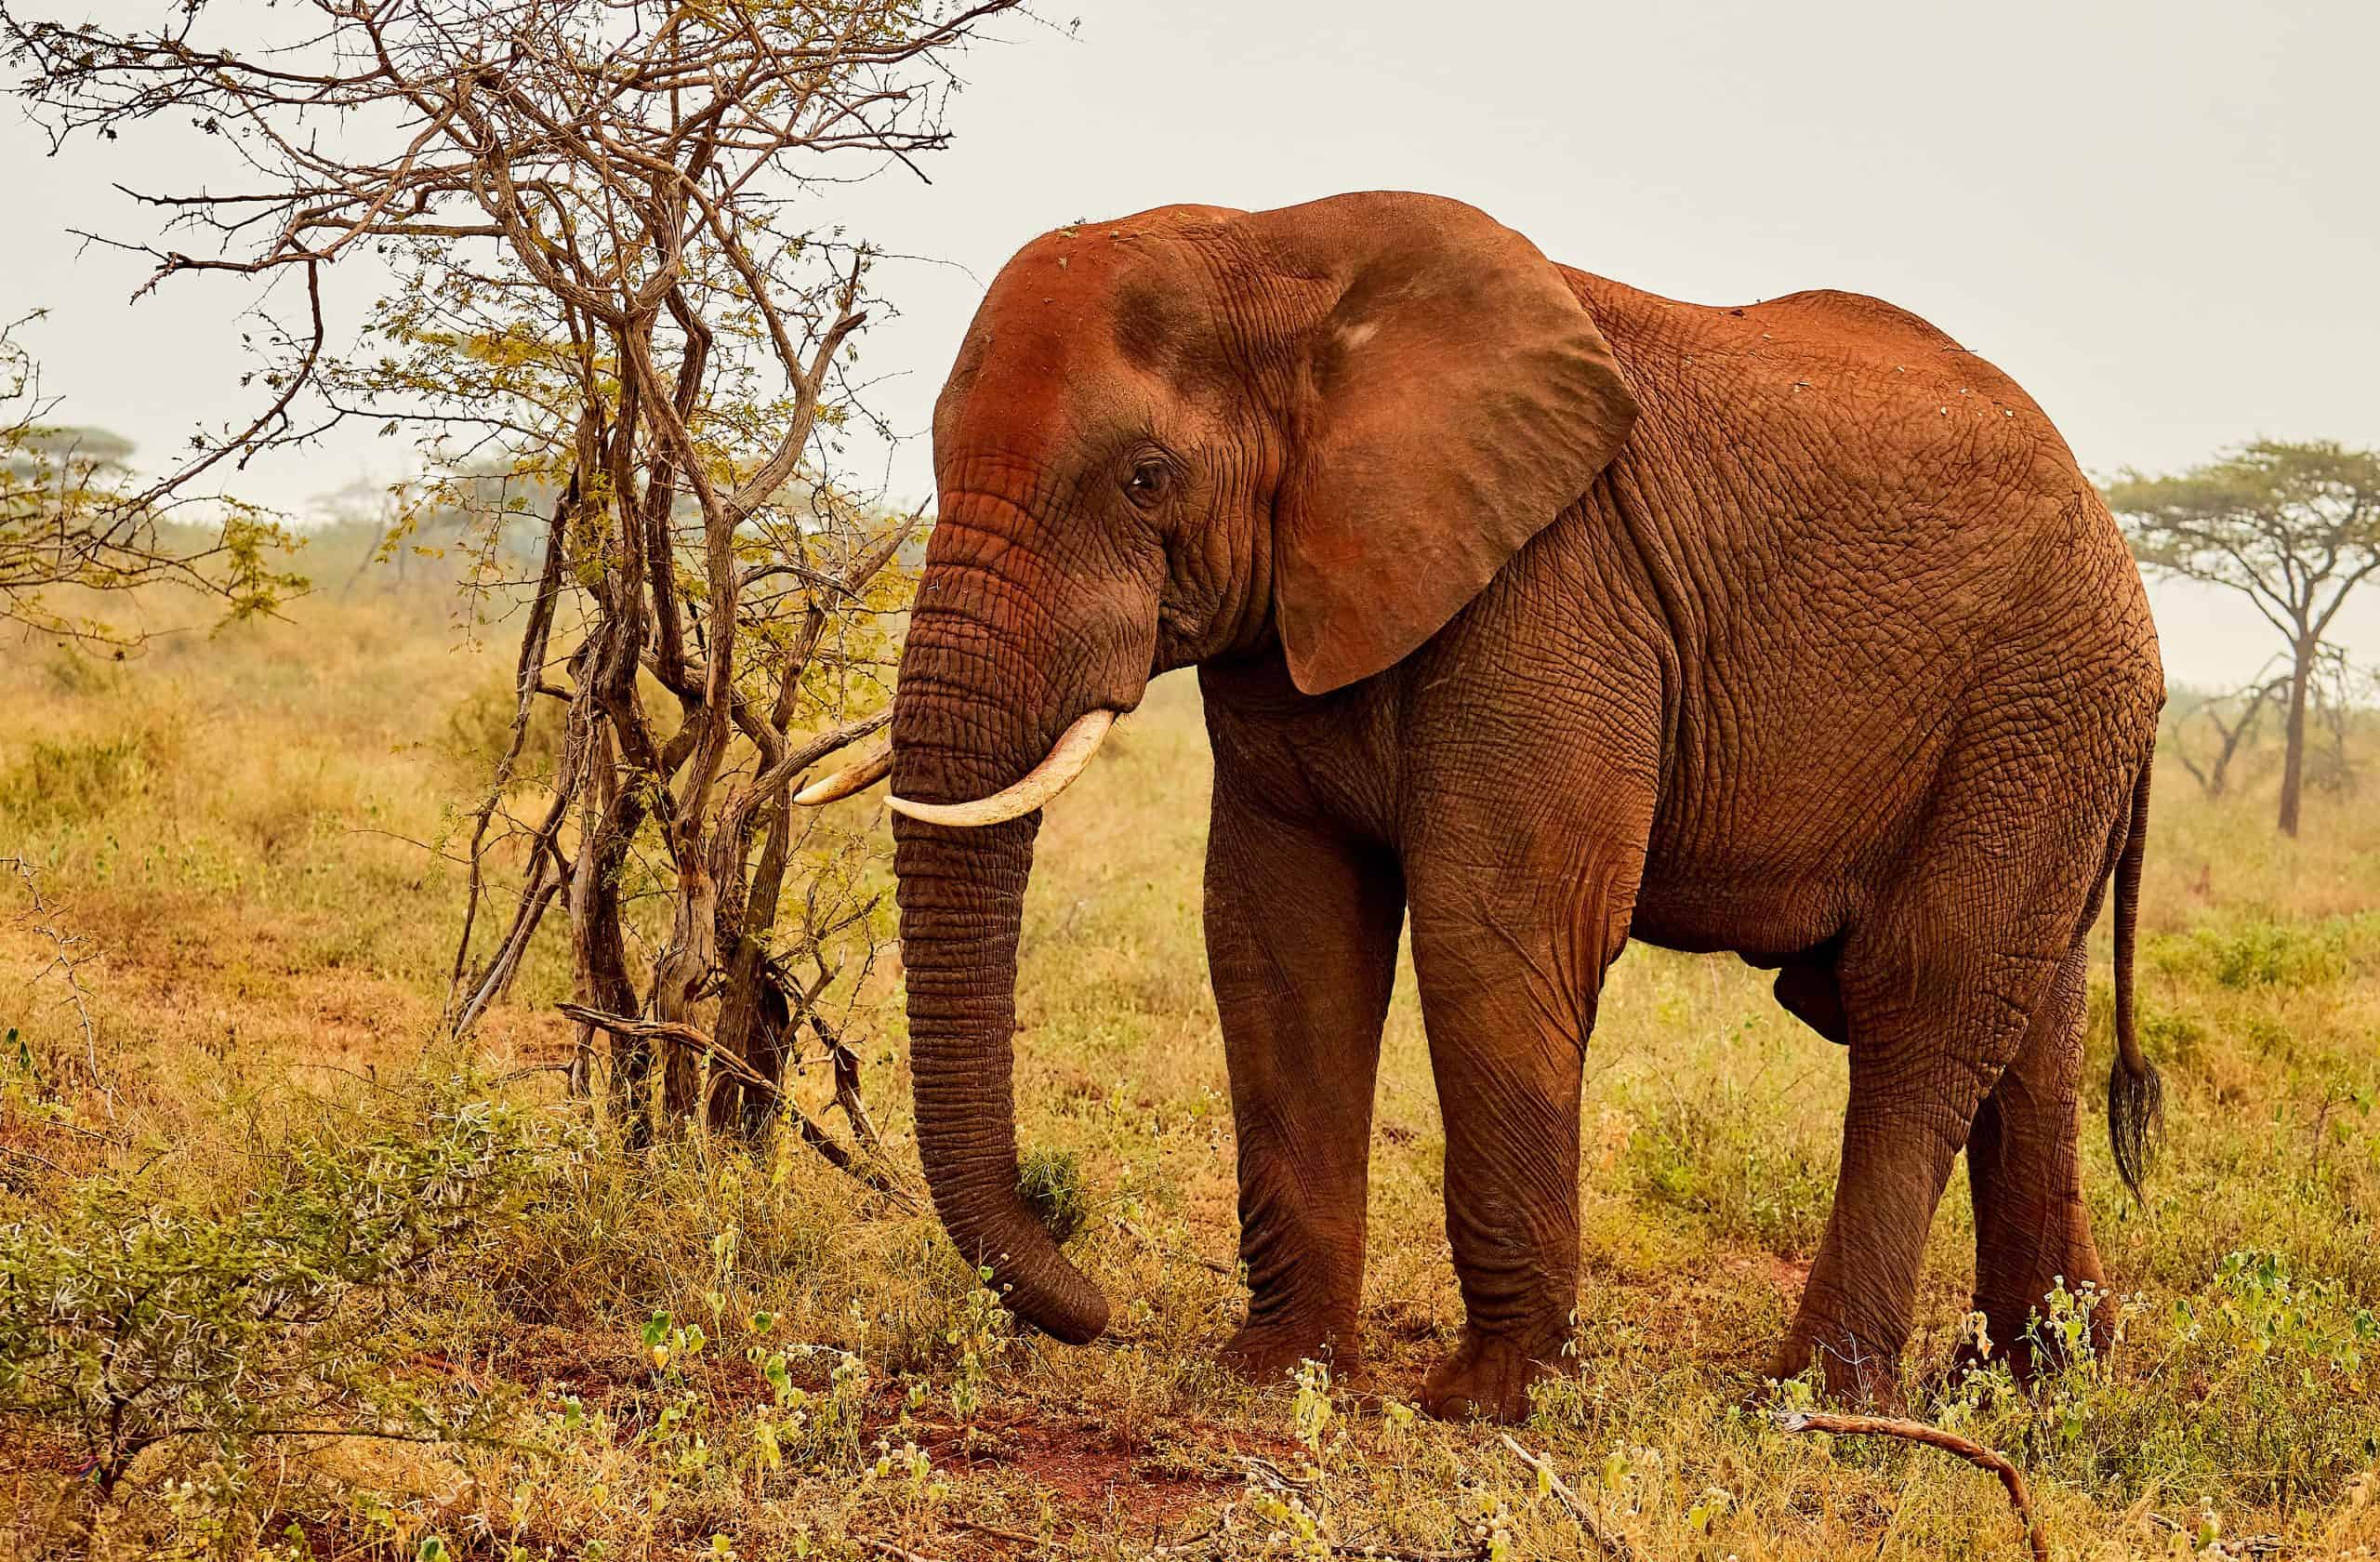 Peaceful African elephant